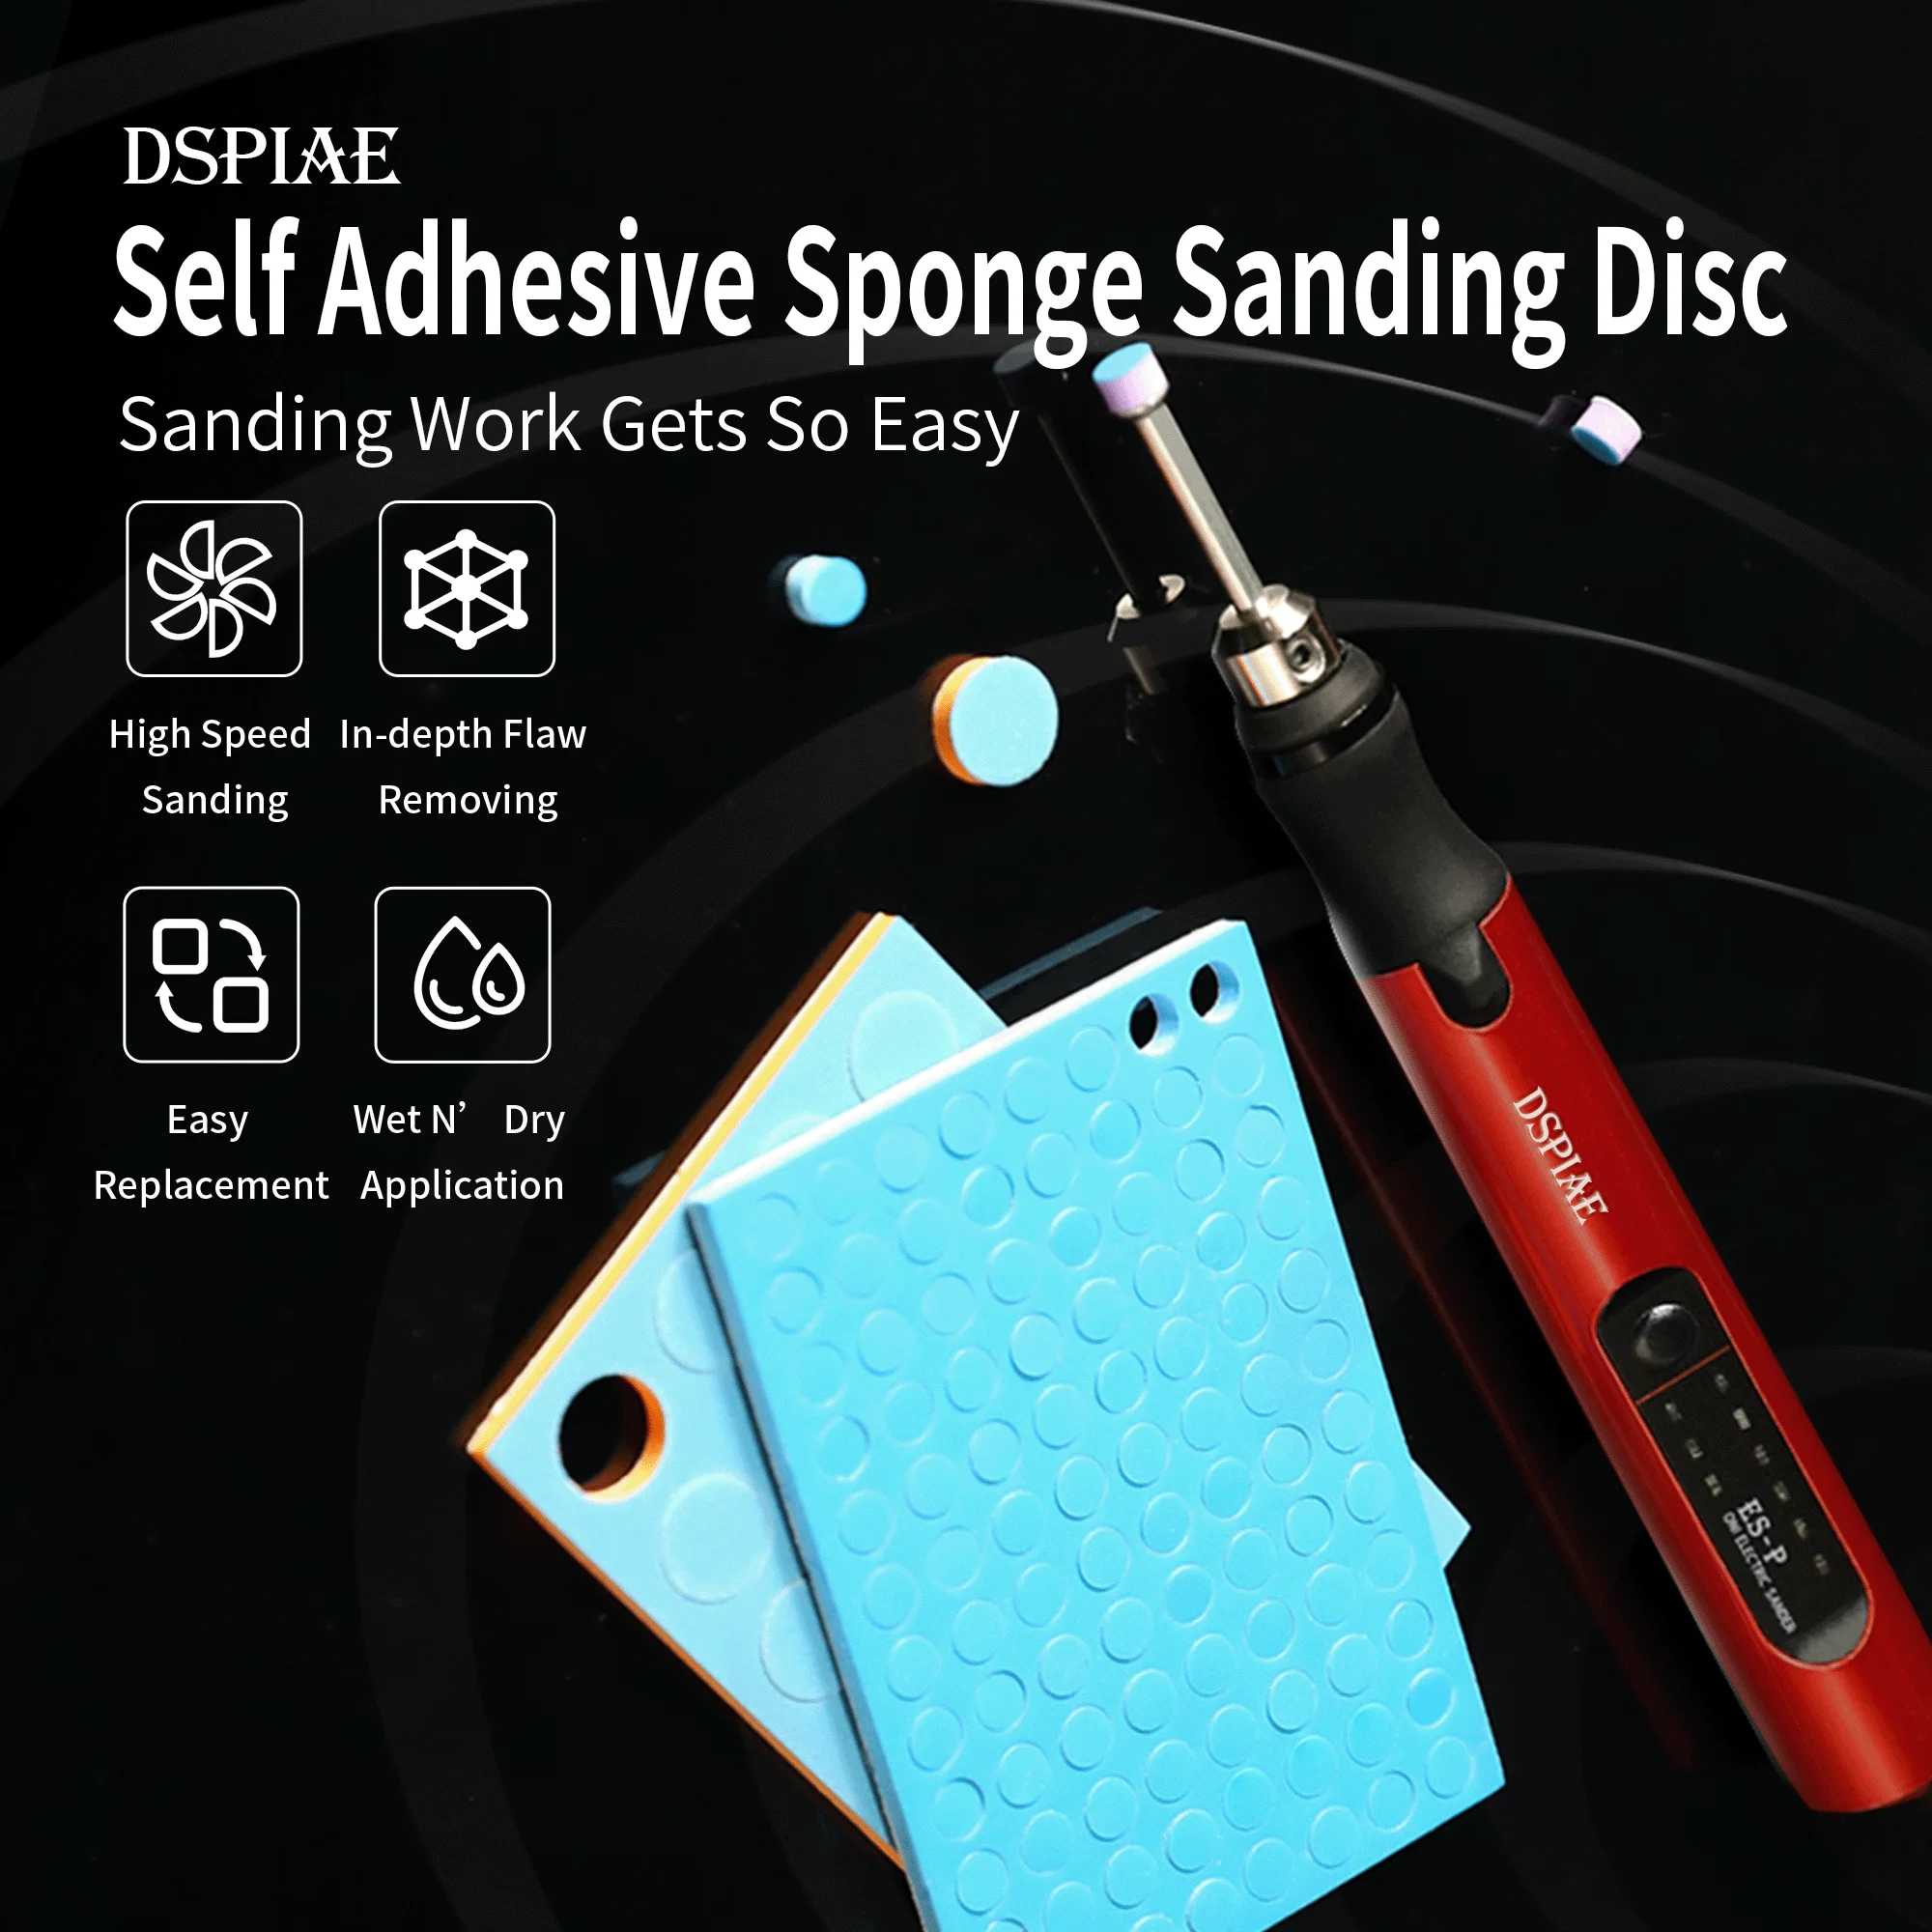 

DSPIAE SS-C01 Self Adhesive Sponge Sanding Disc Military Model Making Tool Assembly Remodeling Gundam Hobby DIY